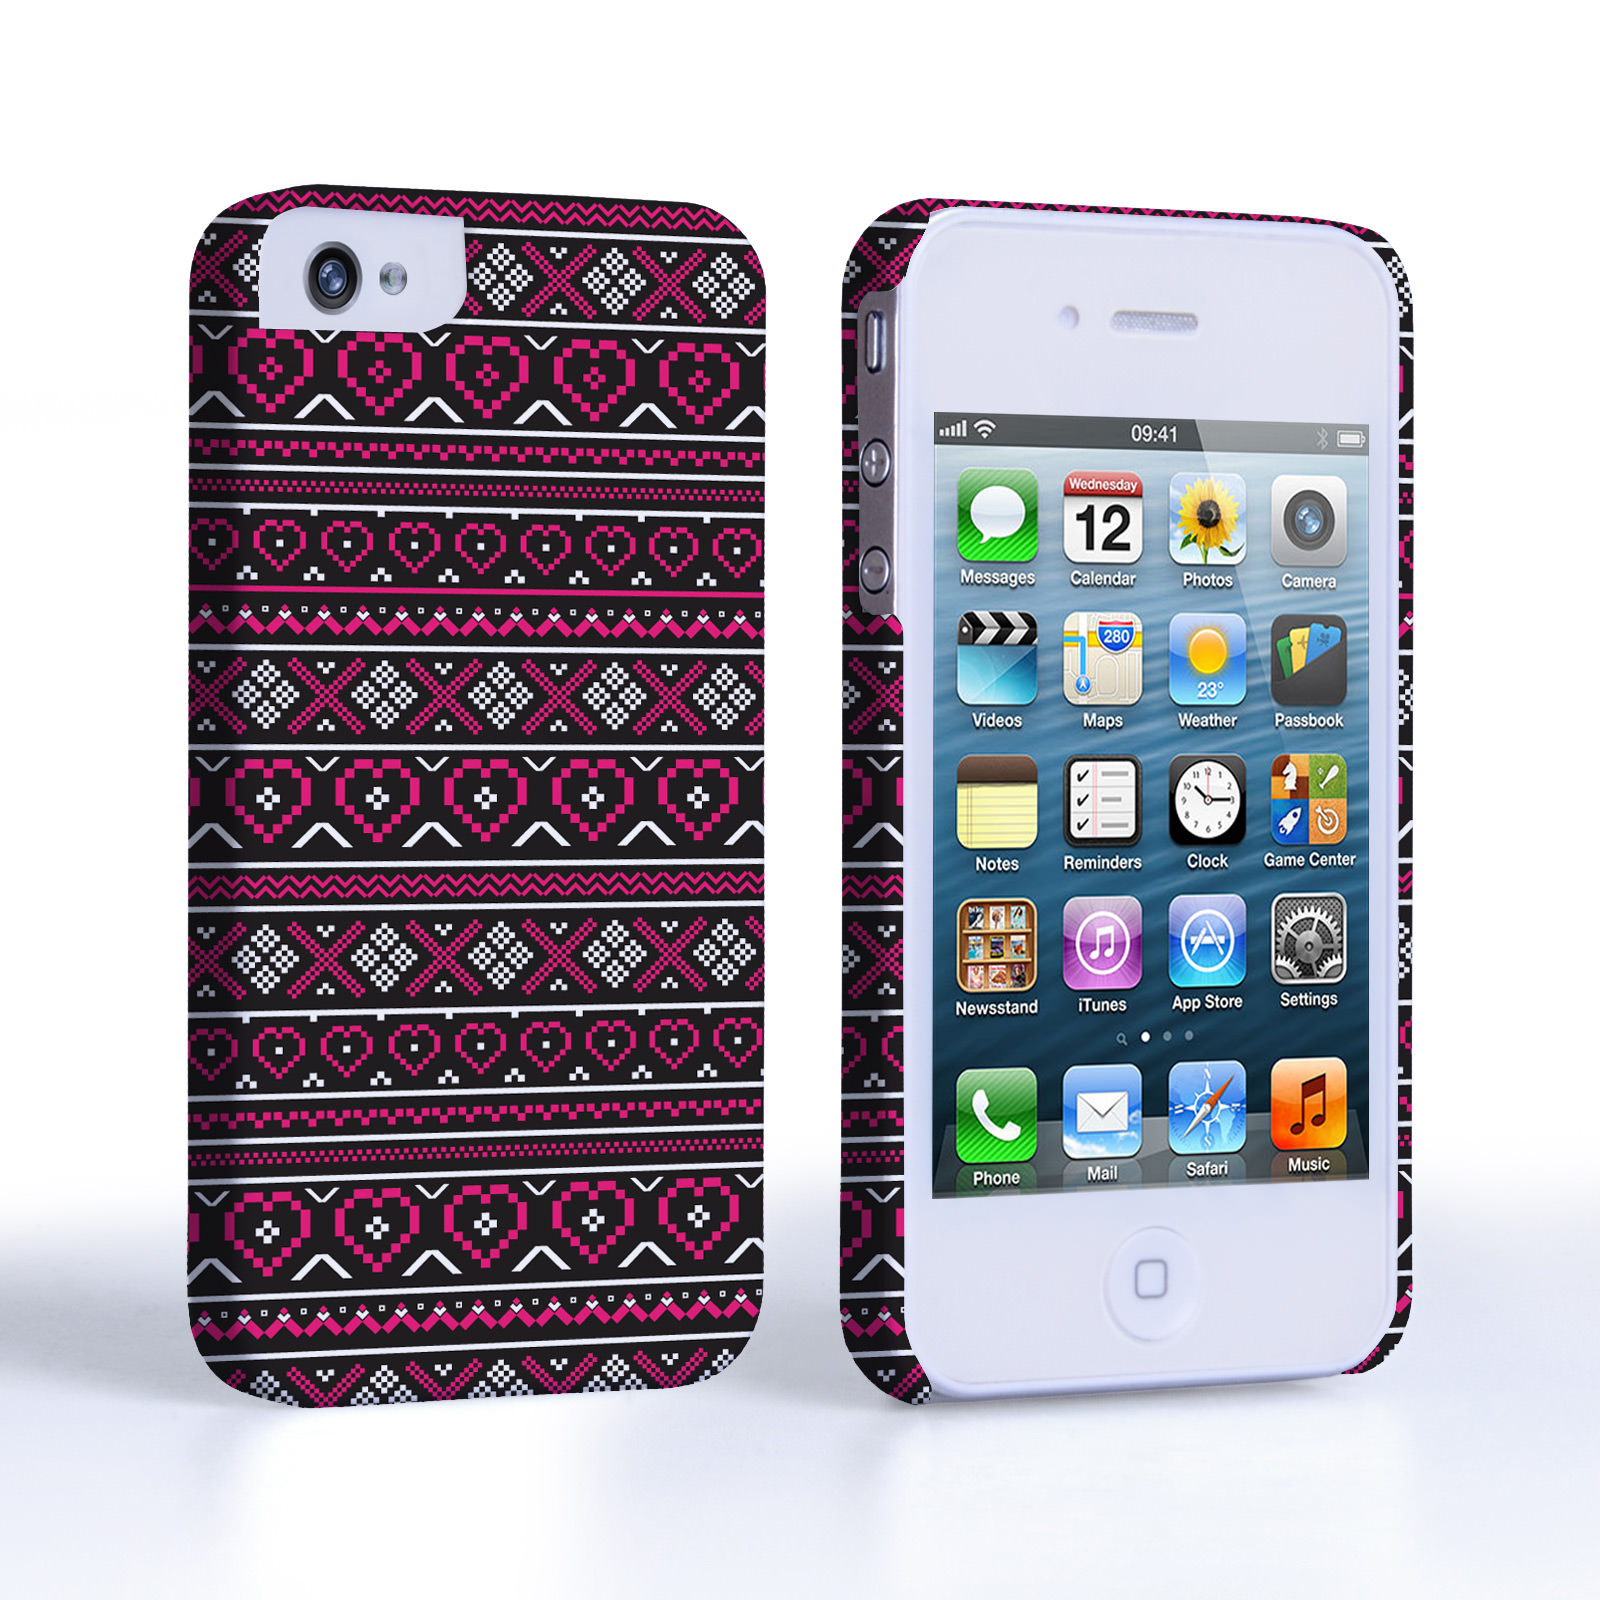 Caseflex iPhone 4/4S Fairisle Case – Pink and Black